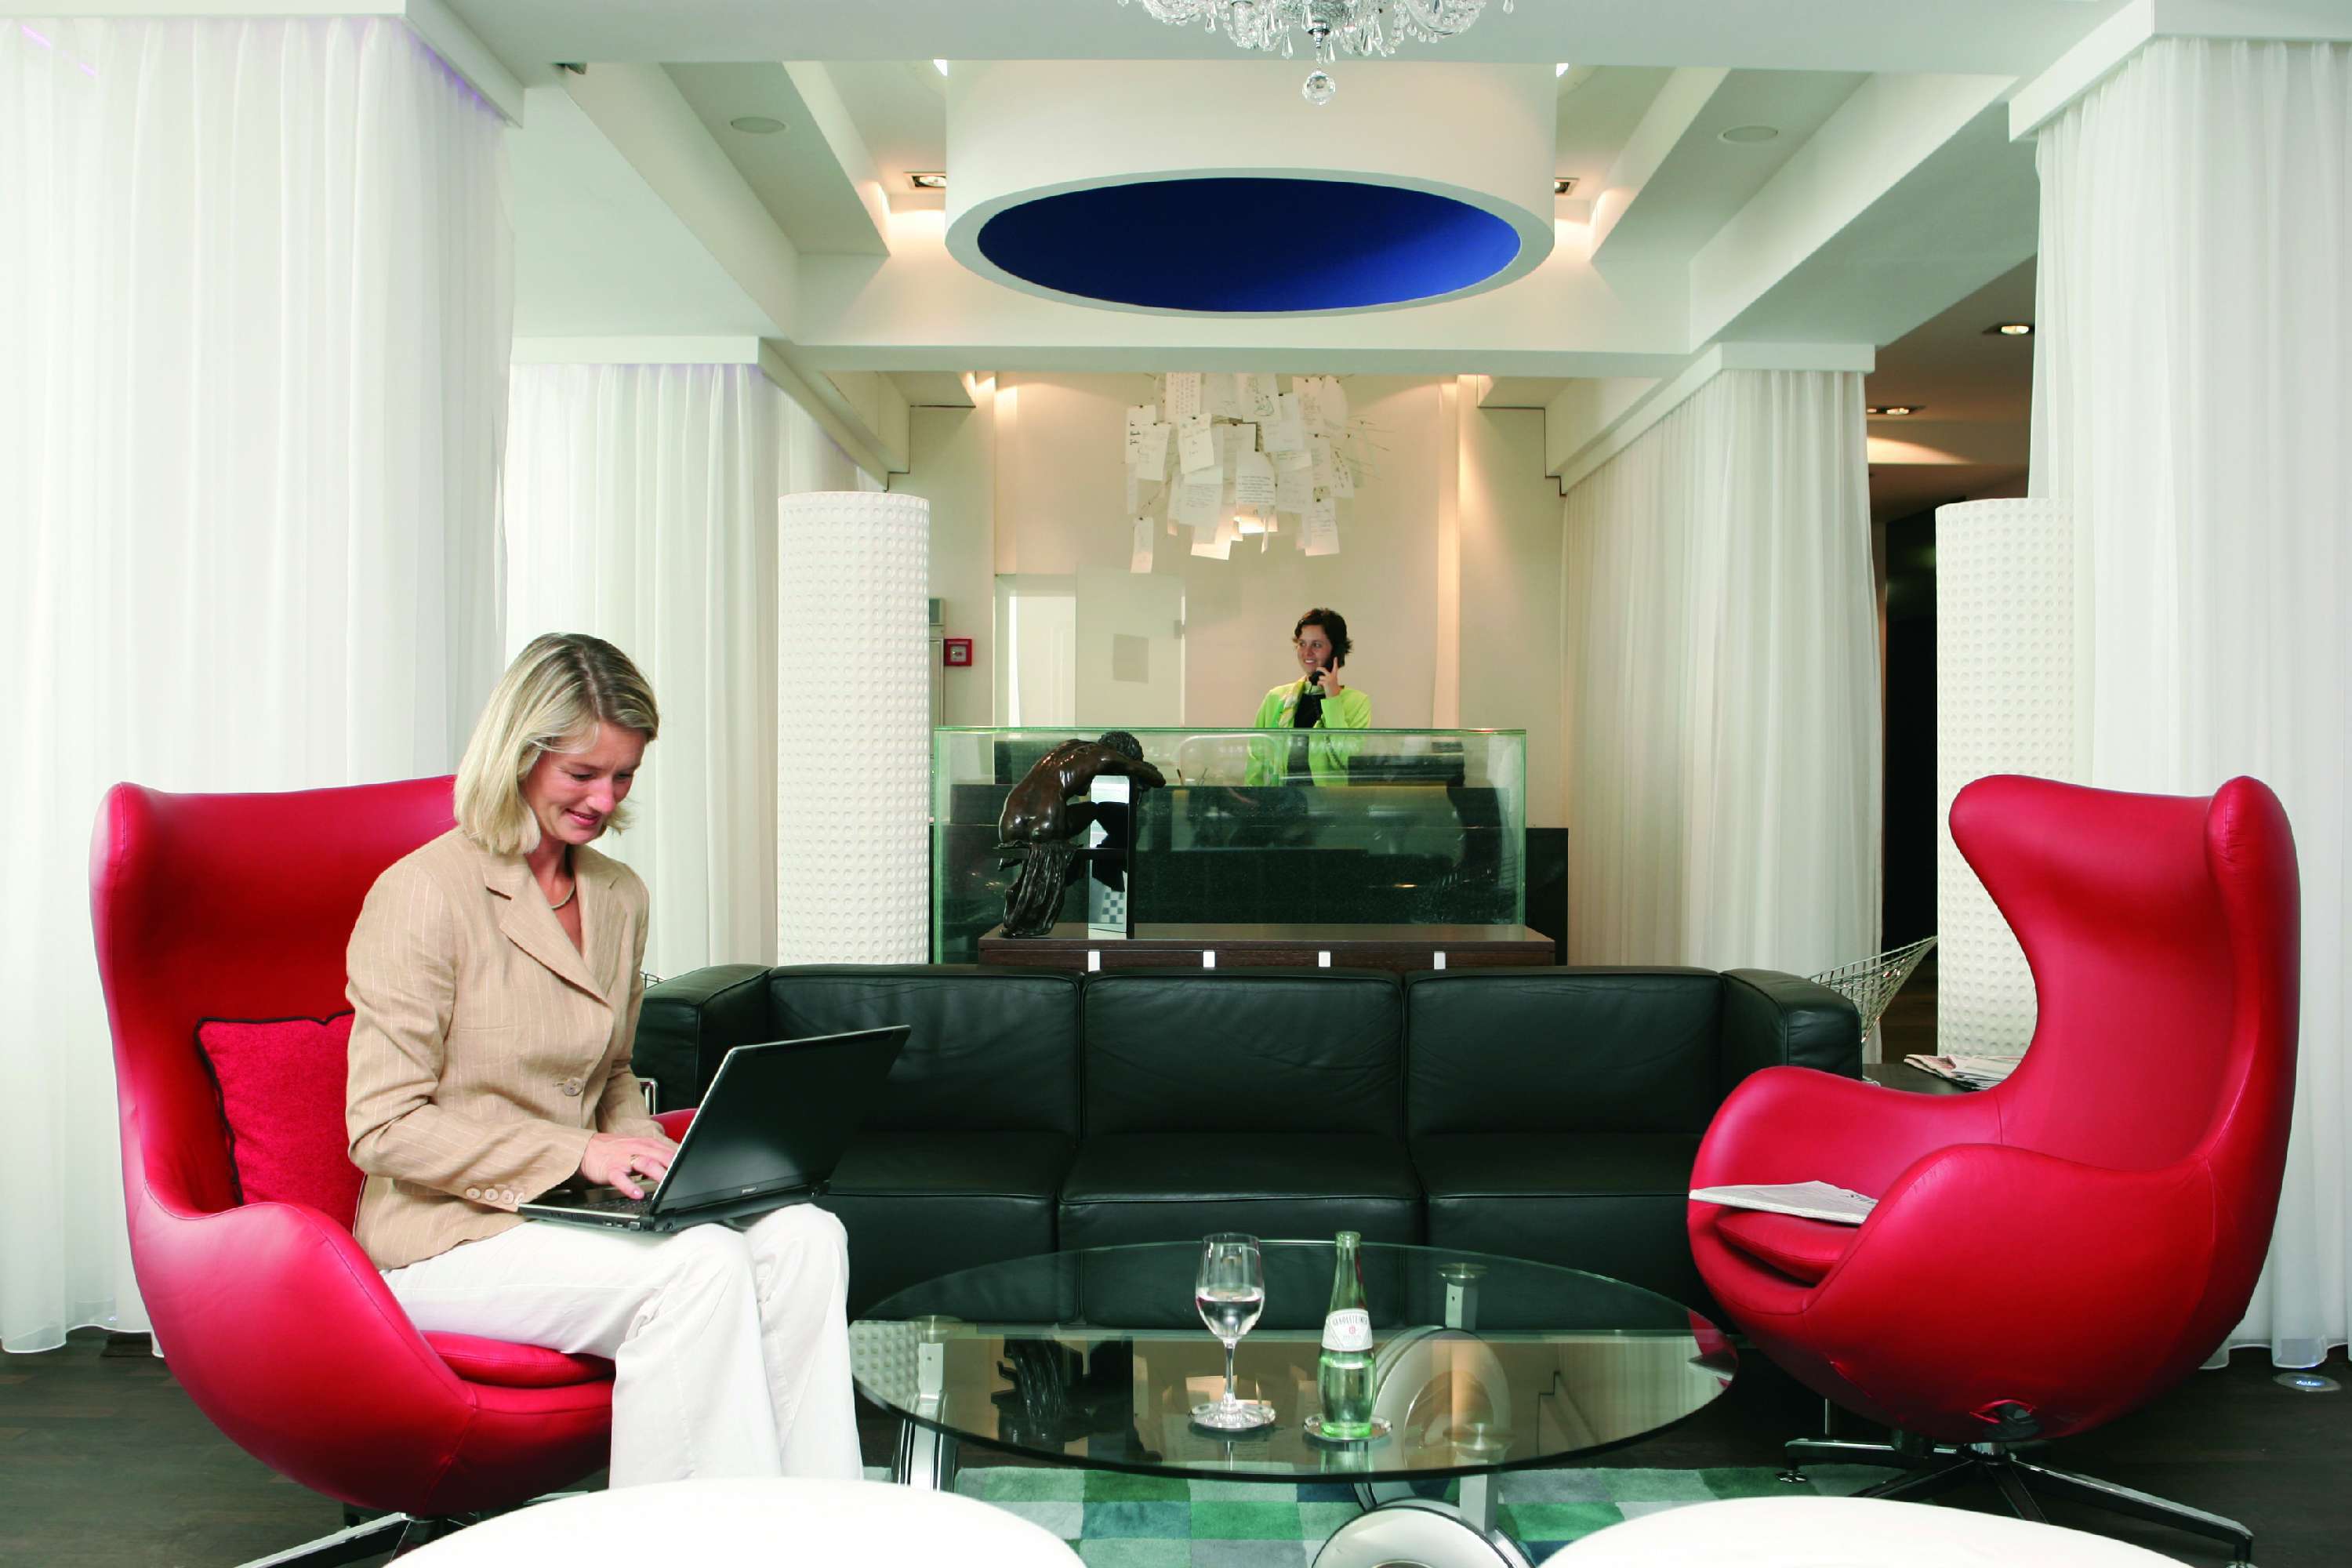 Hotel Galerie Design Hotel Bonn managed by Maritim Hotels